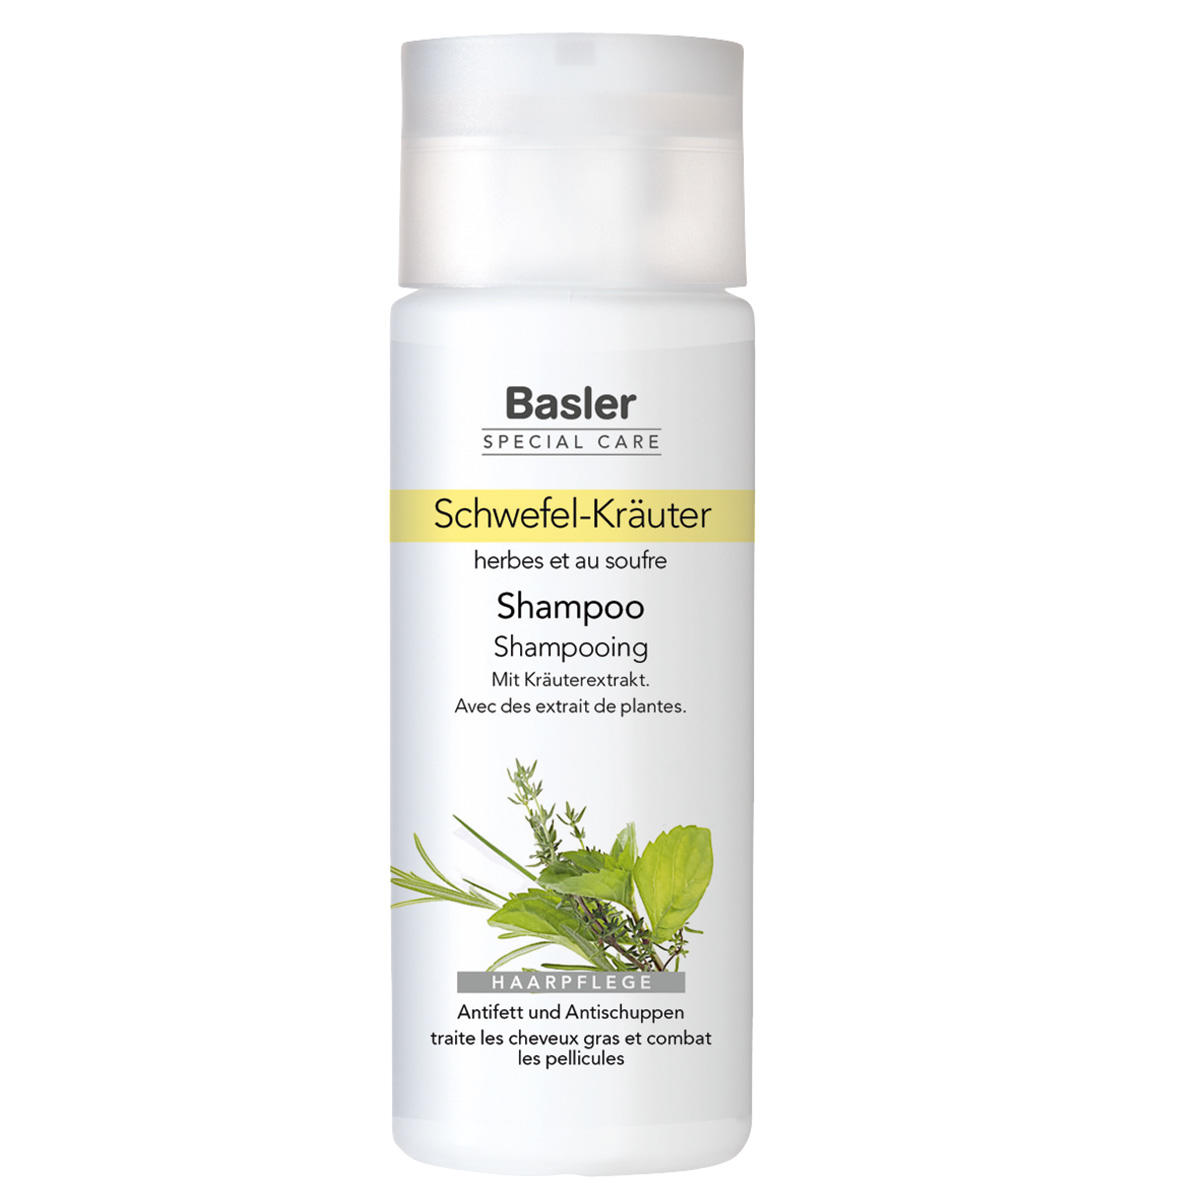 Basler Sulfur herbs shampoo Bottle 200 ml - 1